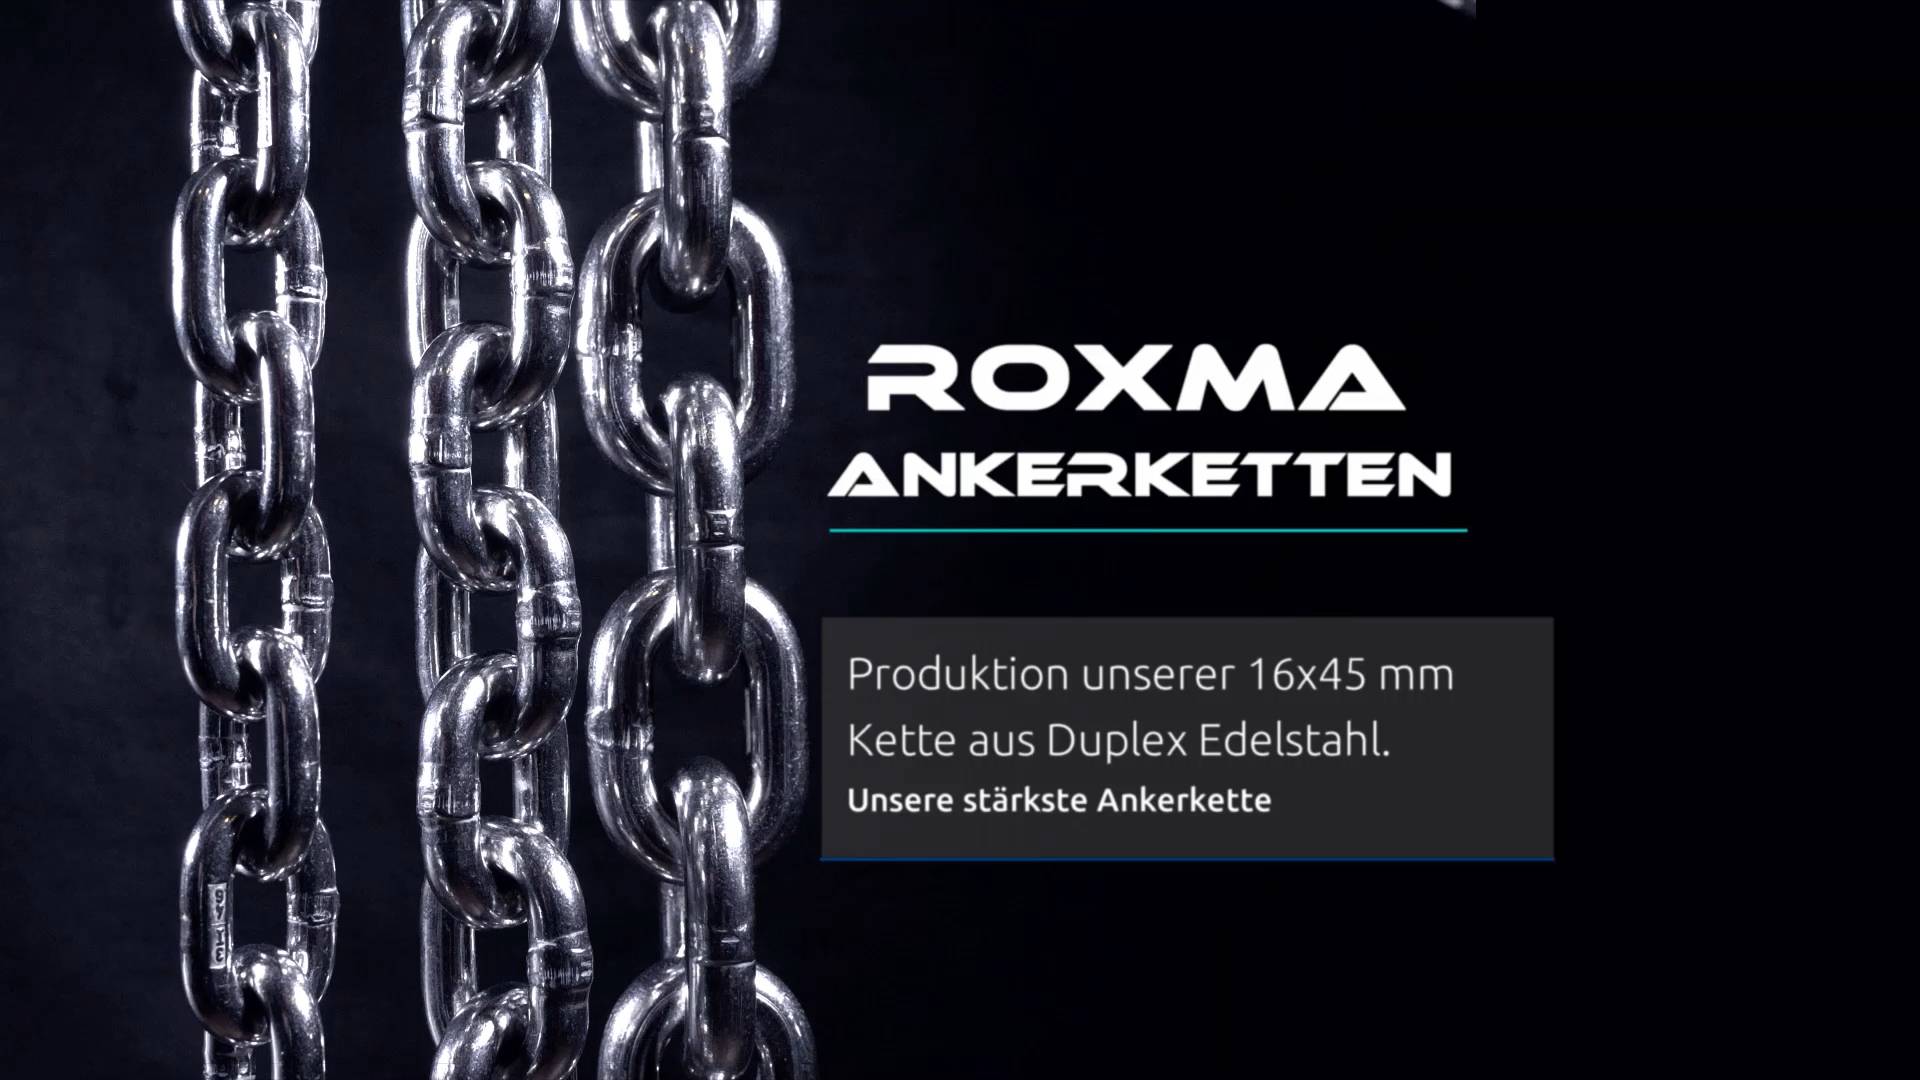 ROXMA Ankerkettenproduktion